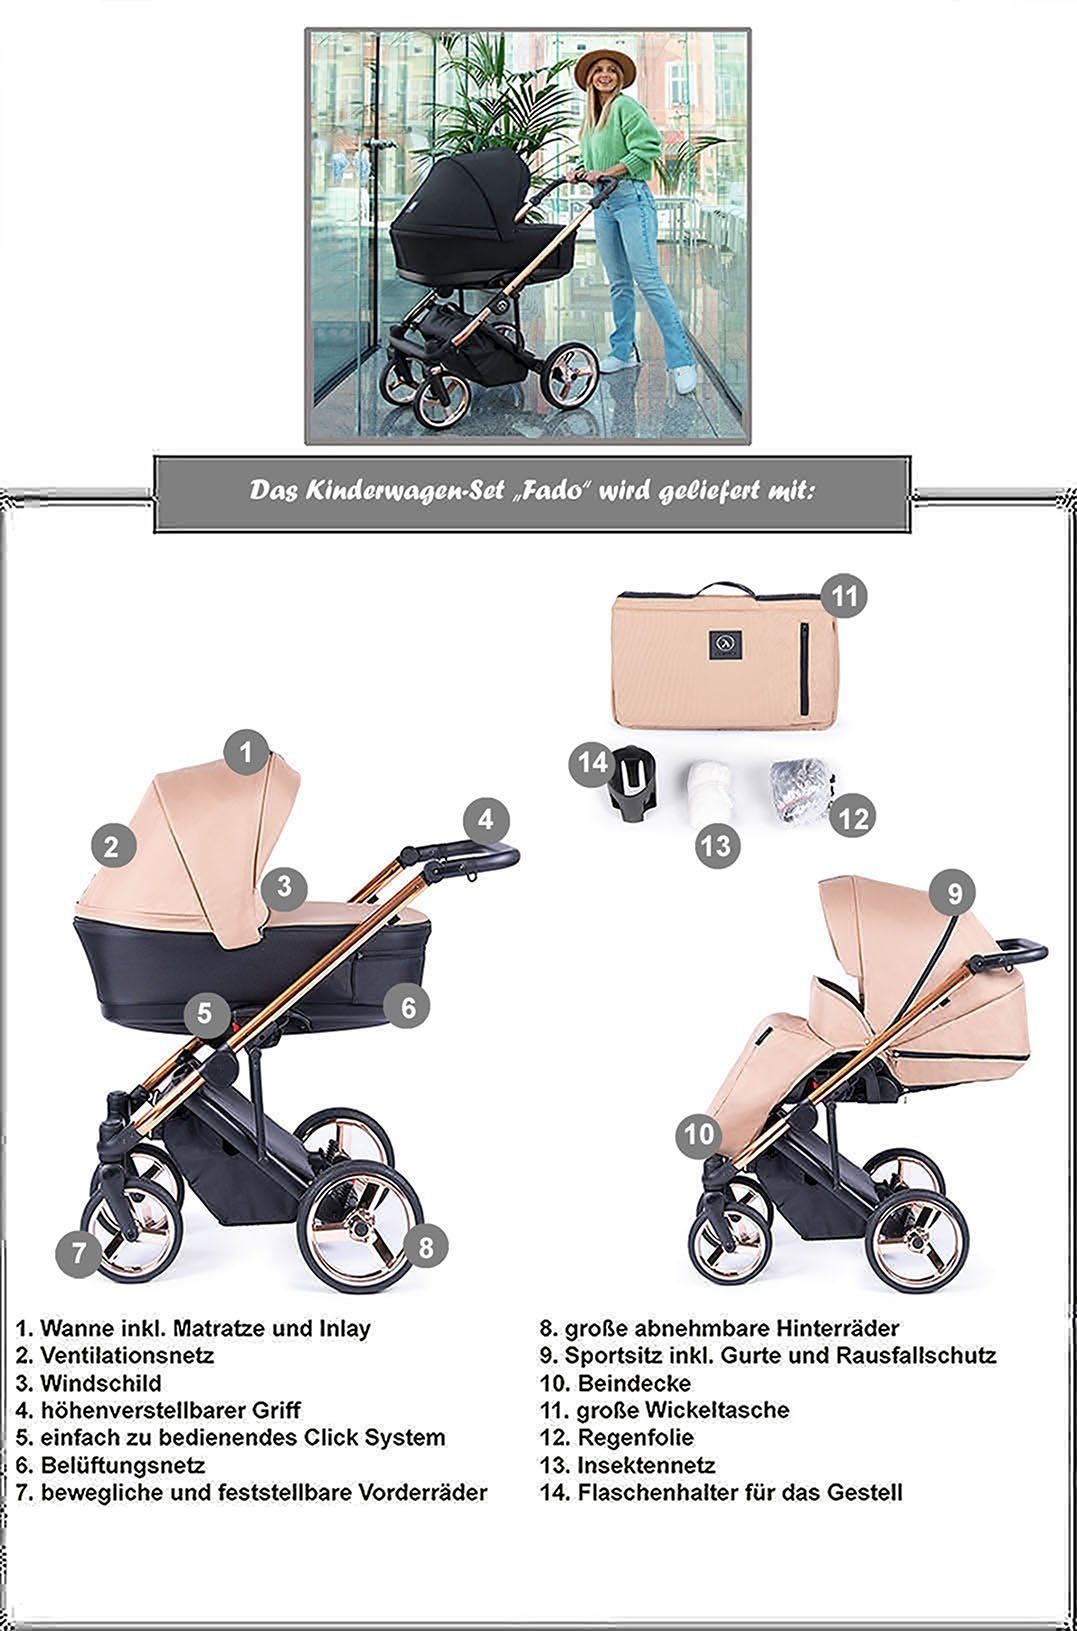 24 Teile Gestell Türkis schwarz Designs 2 in = Kinderwagen-Set - in - babies-on-wheels Kombi-Kinderwagen 1 Fado 14